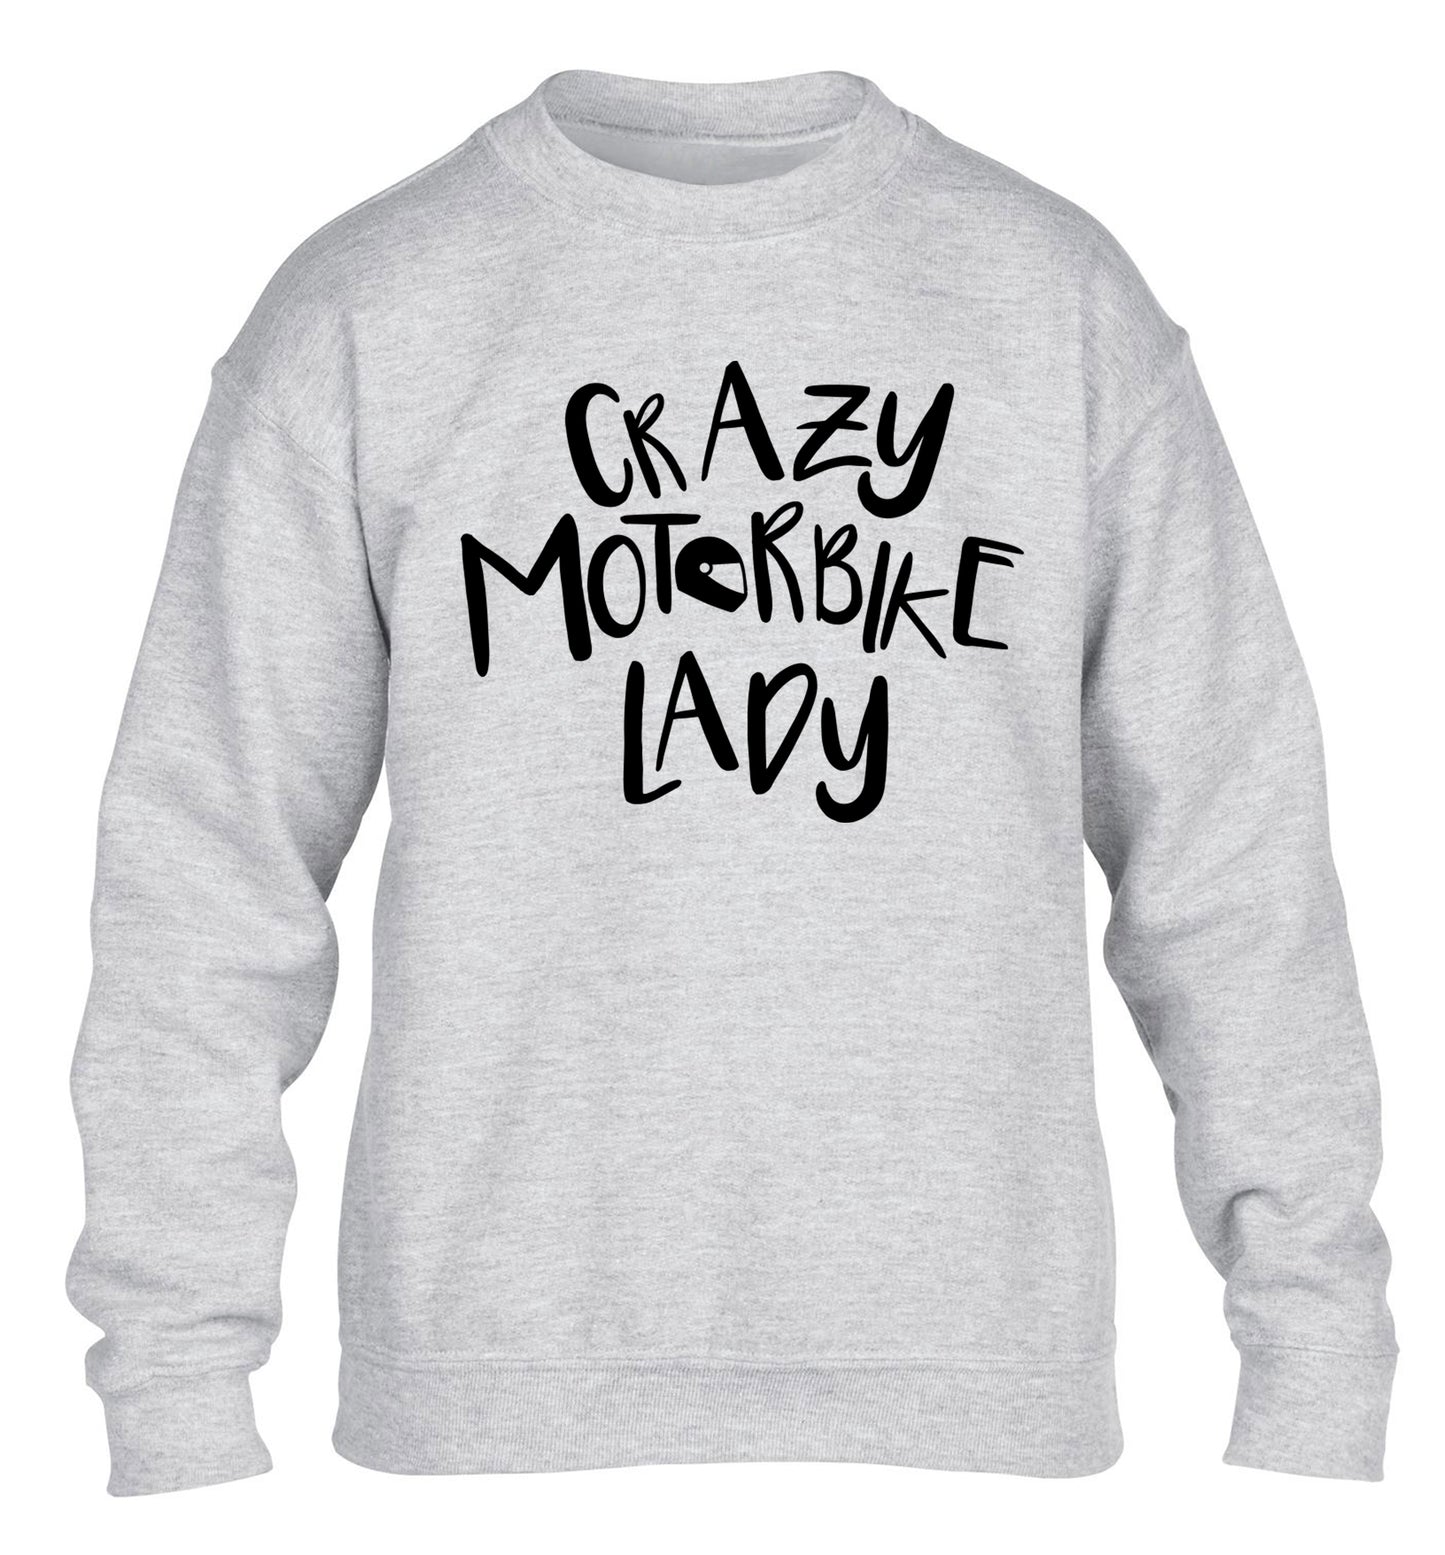 Crazy motorbike lady children's grey sweater 12-13 Years